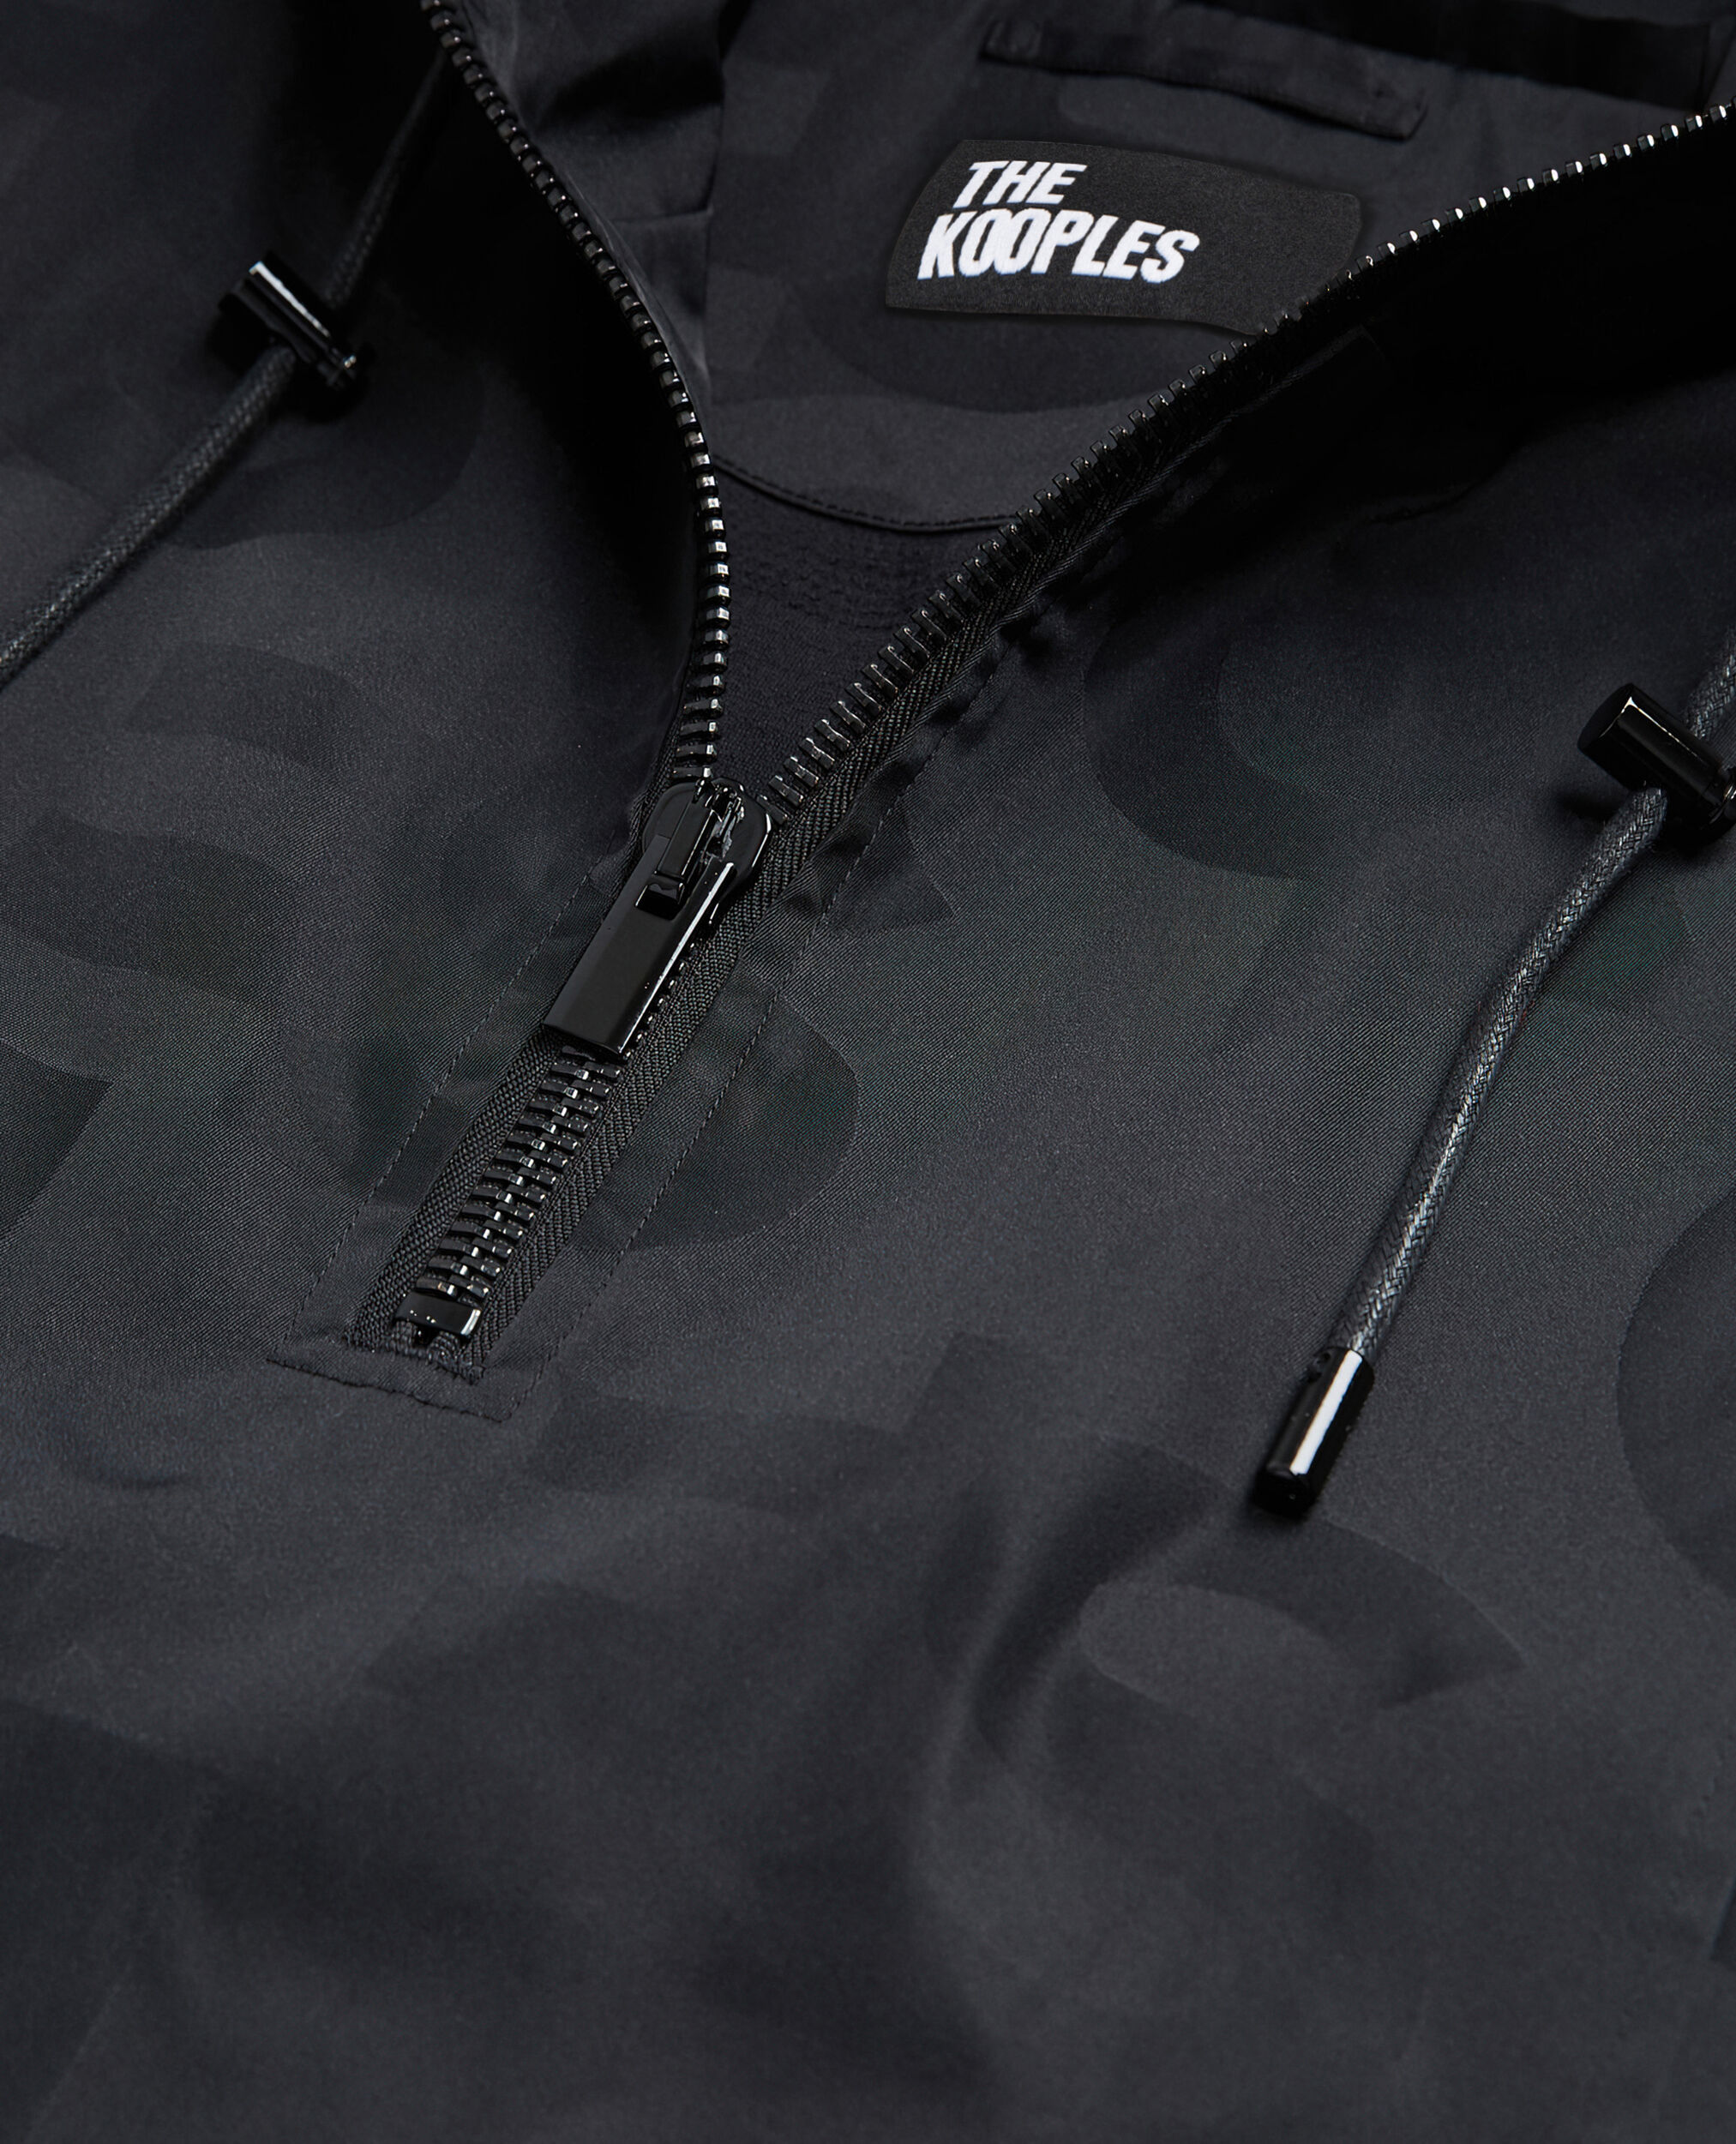 The Kooples black jacket with logo, BLACK, hi-res image number null